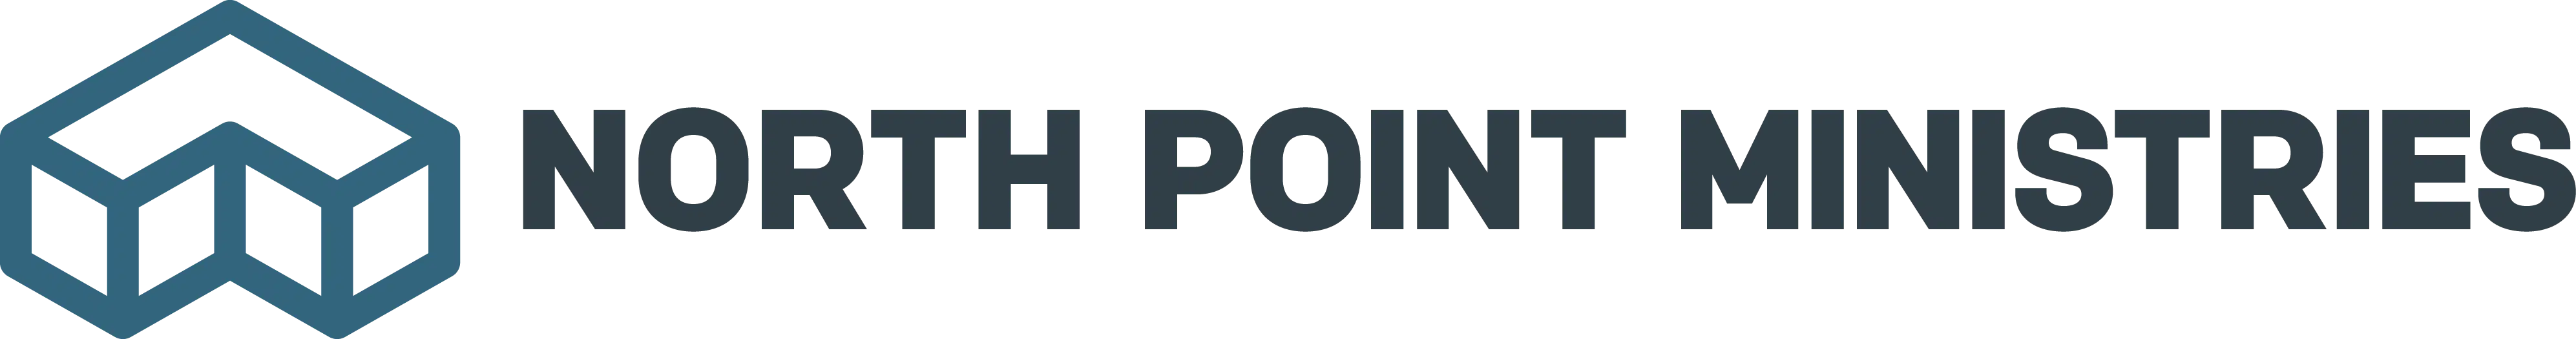 North Point Ministries Logo